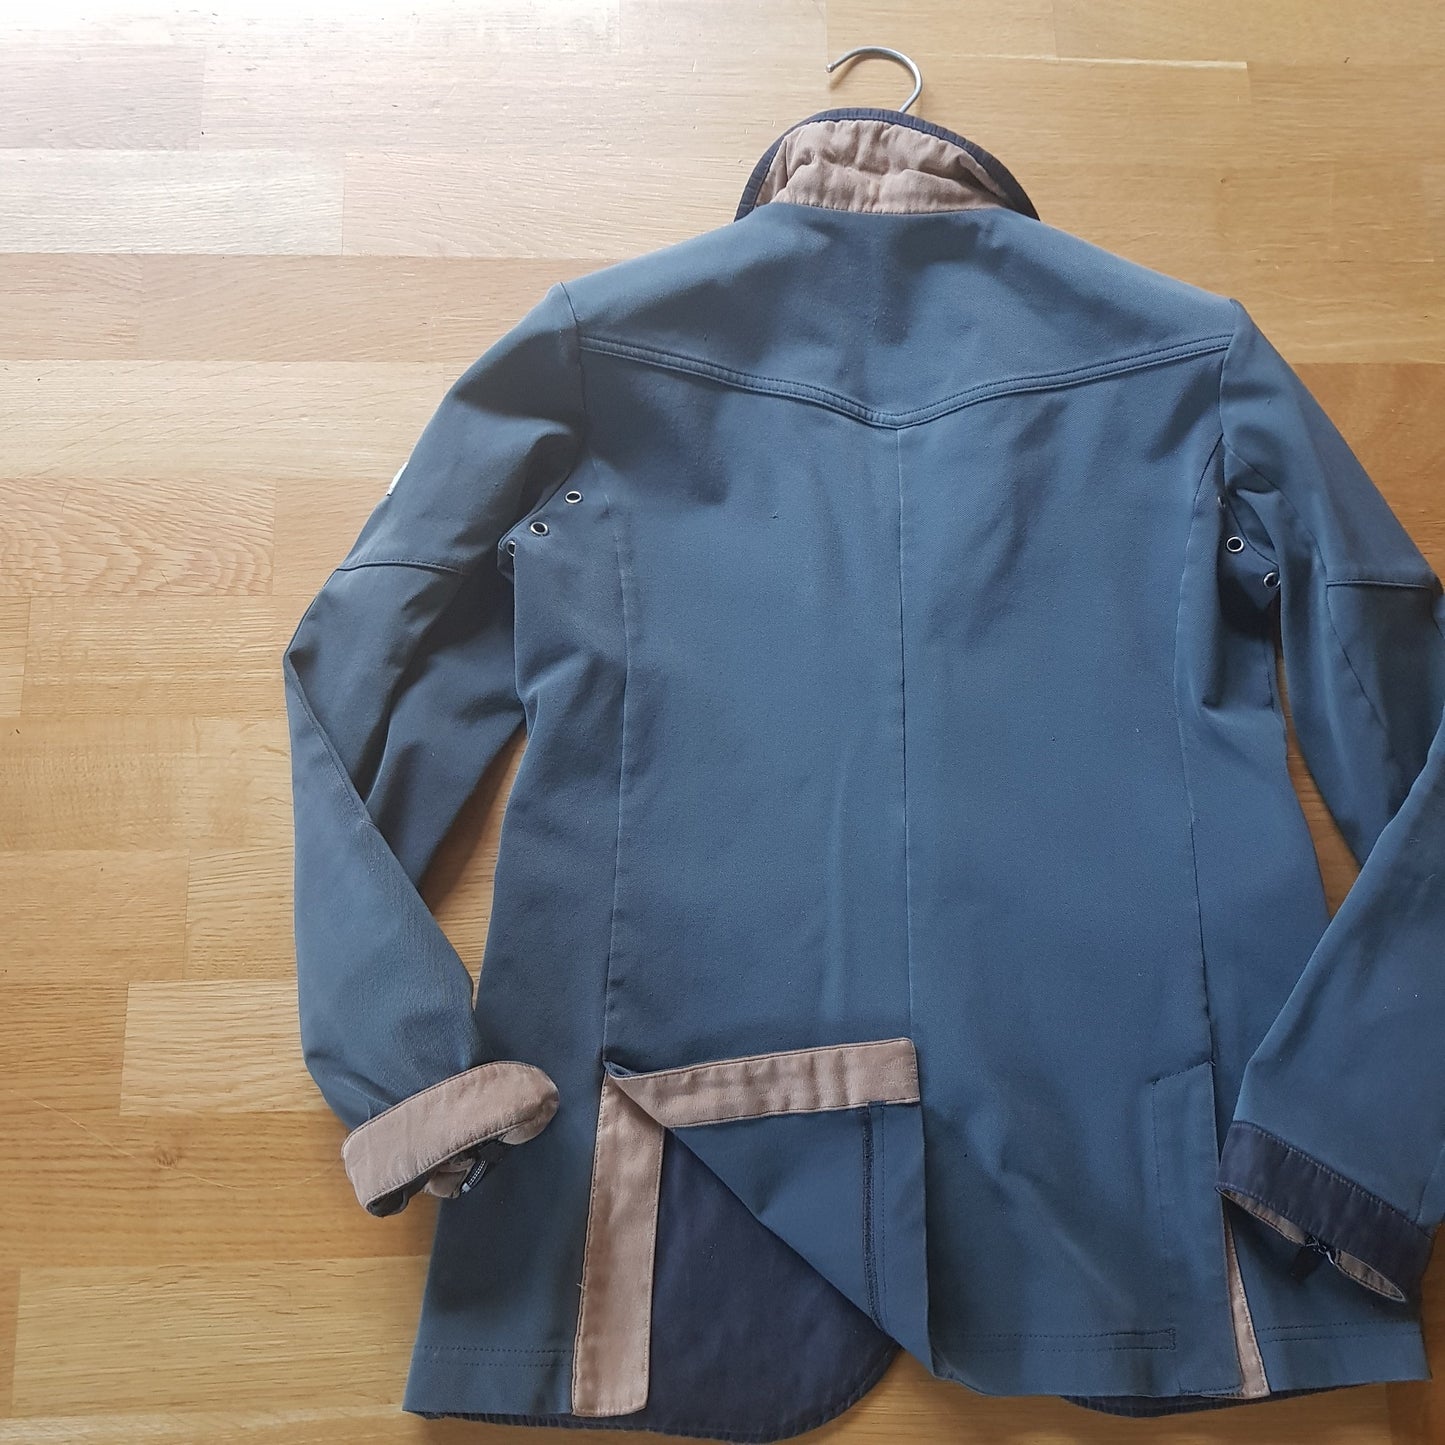 Animo boys grey show jacket  (boys size / age 12) - Robyn's Tack Room 